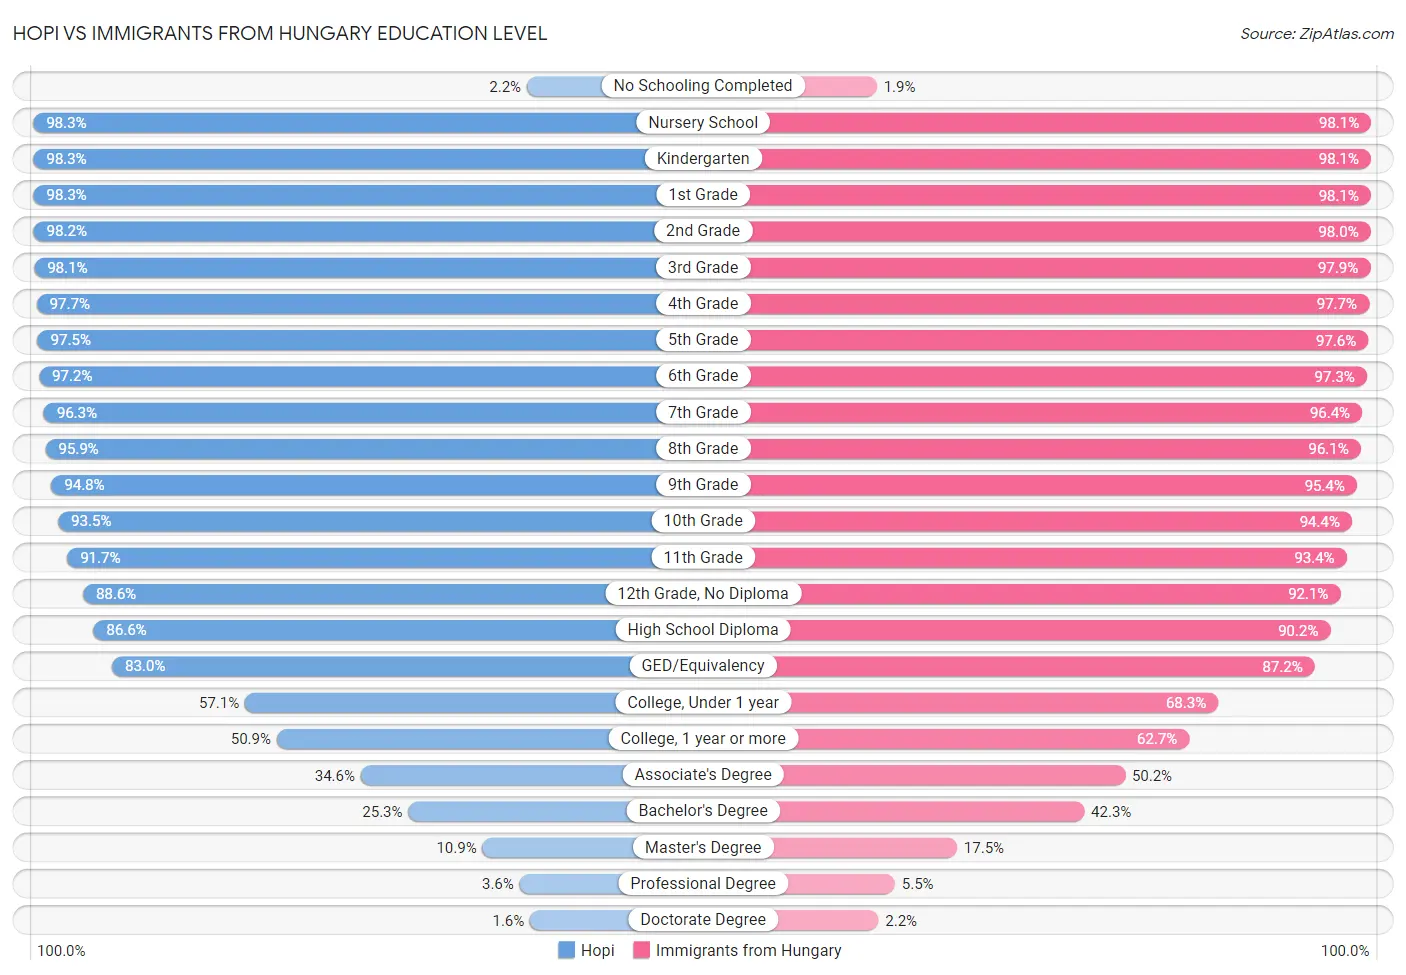 Hopi vs Immigrants from Hungary Education Level